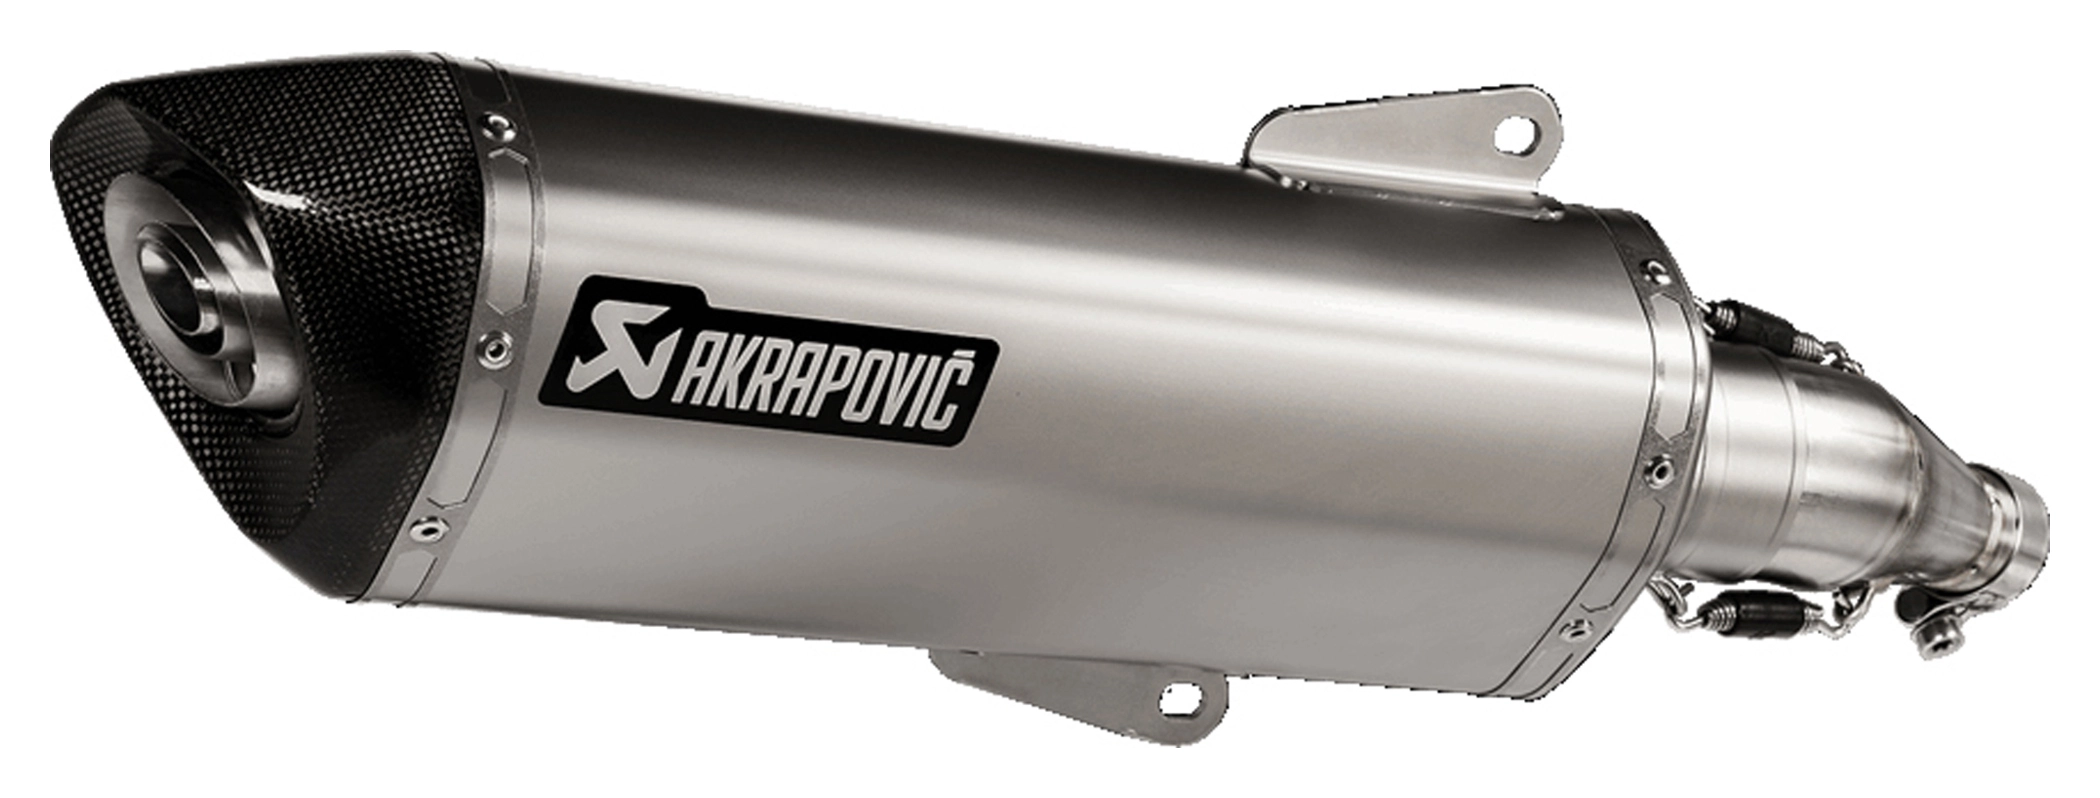 STICKERS AKRAPOVIC metallic exhaust 2 pcs HEAT PROOF! (Compatible Product)